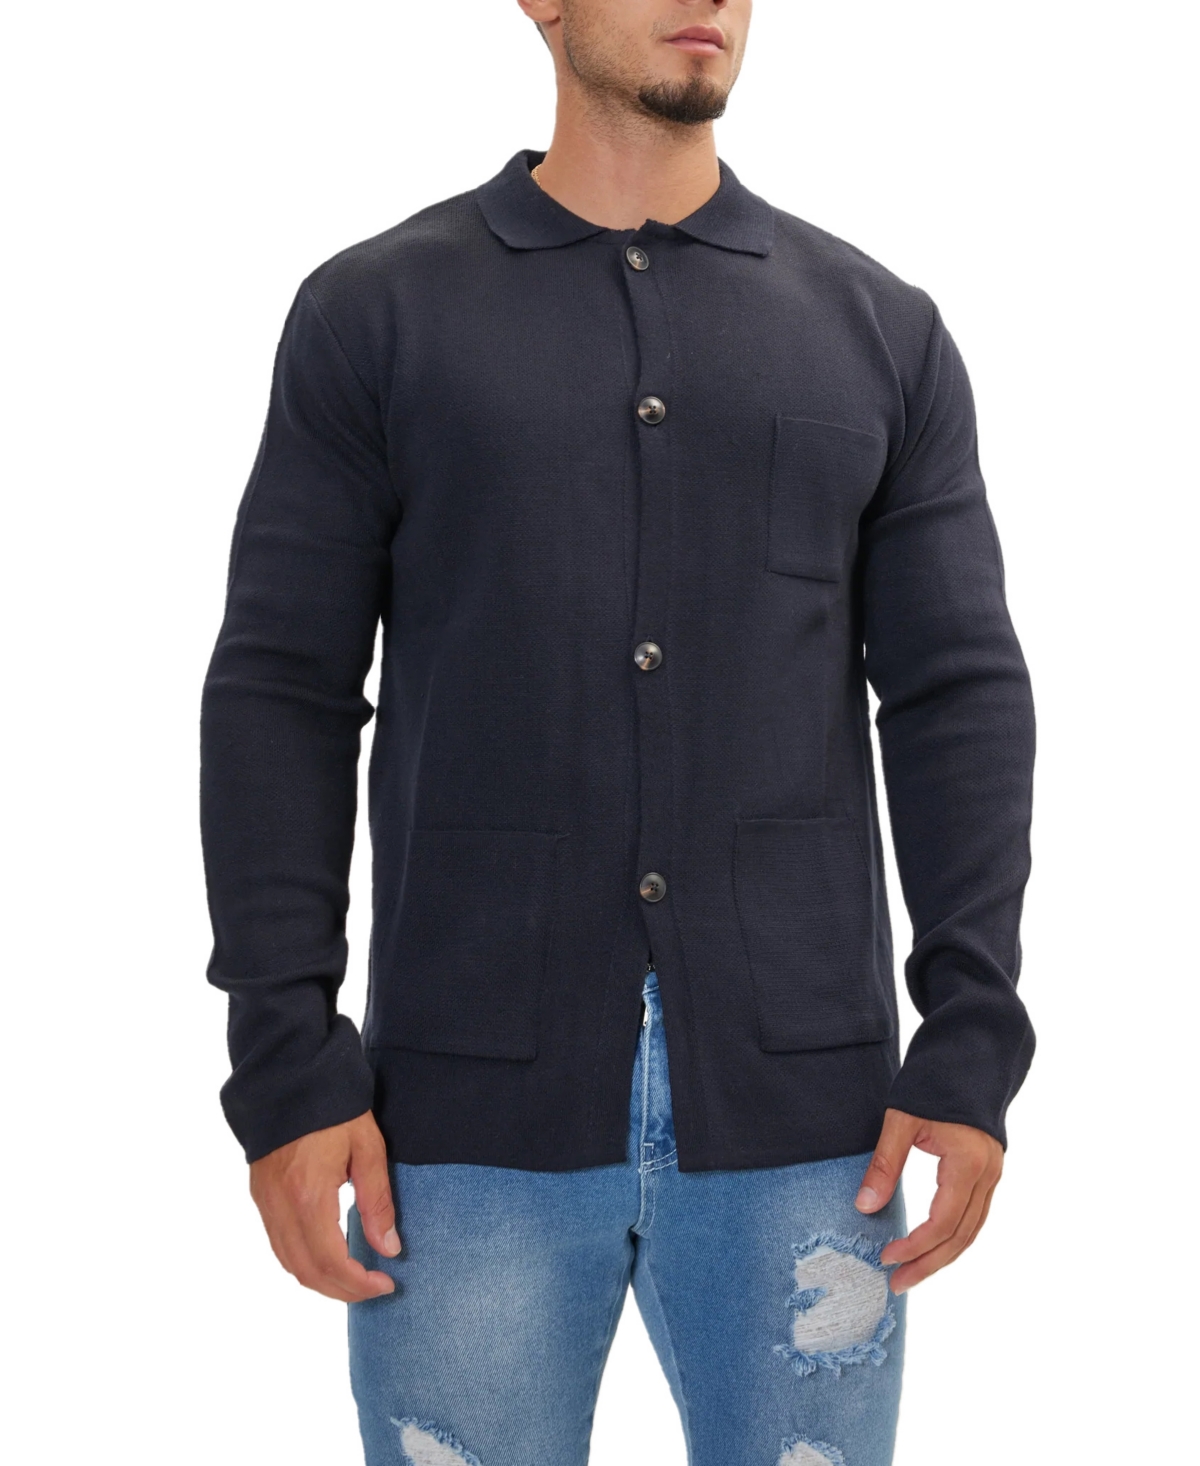 Men's Modern 3-Button Knit Jacket - Navy